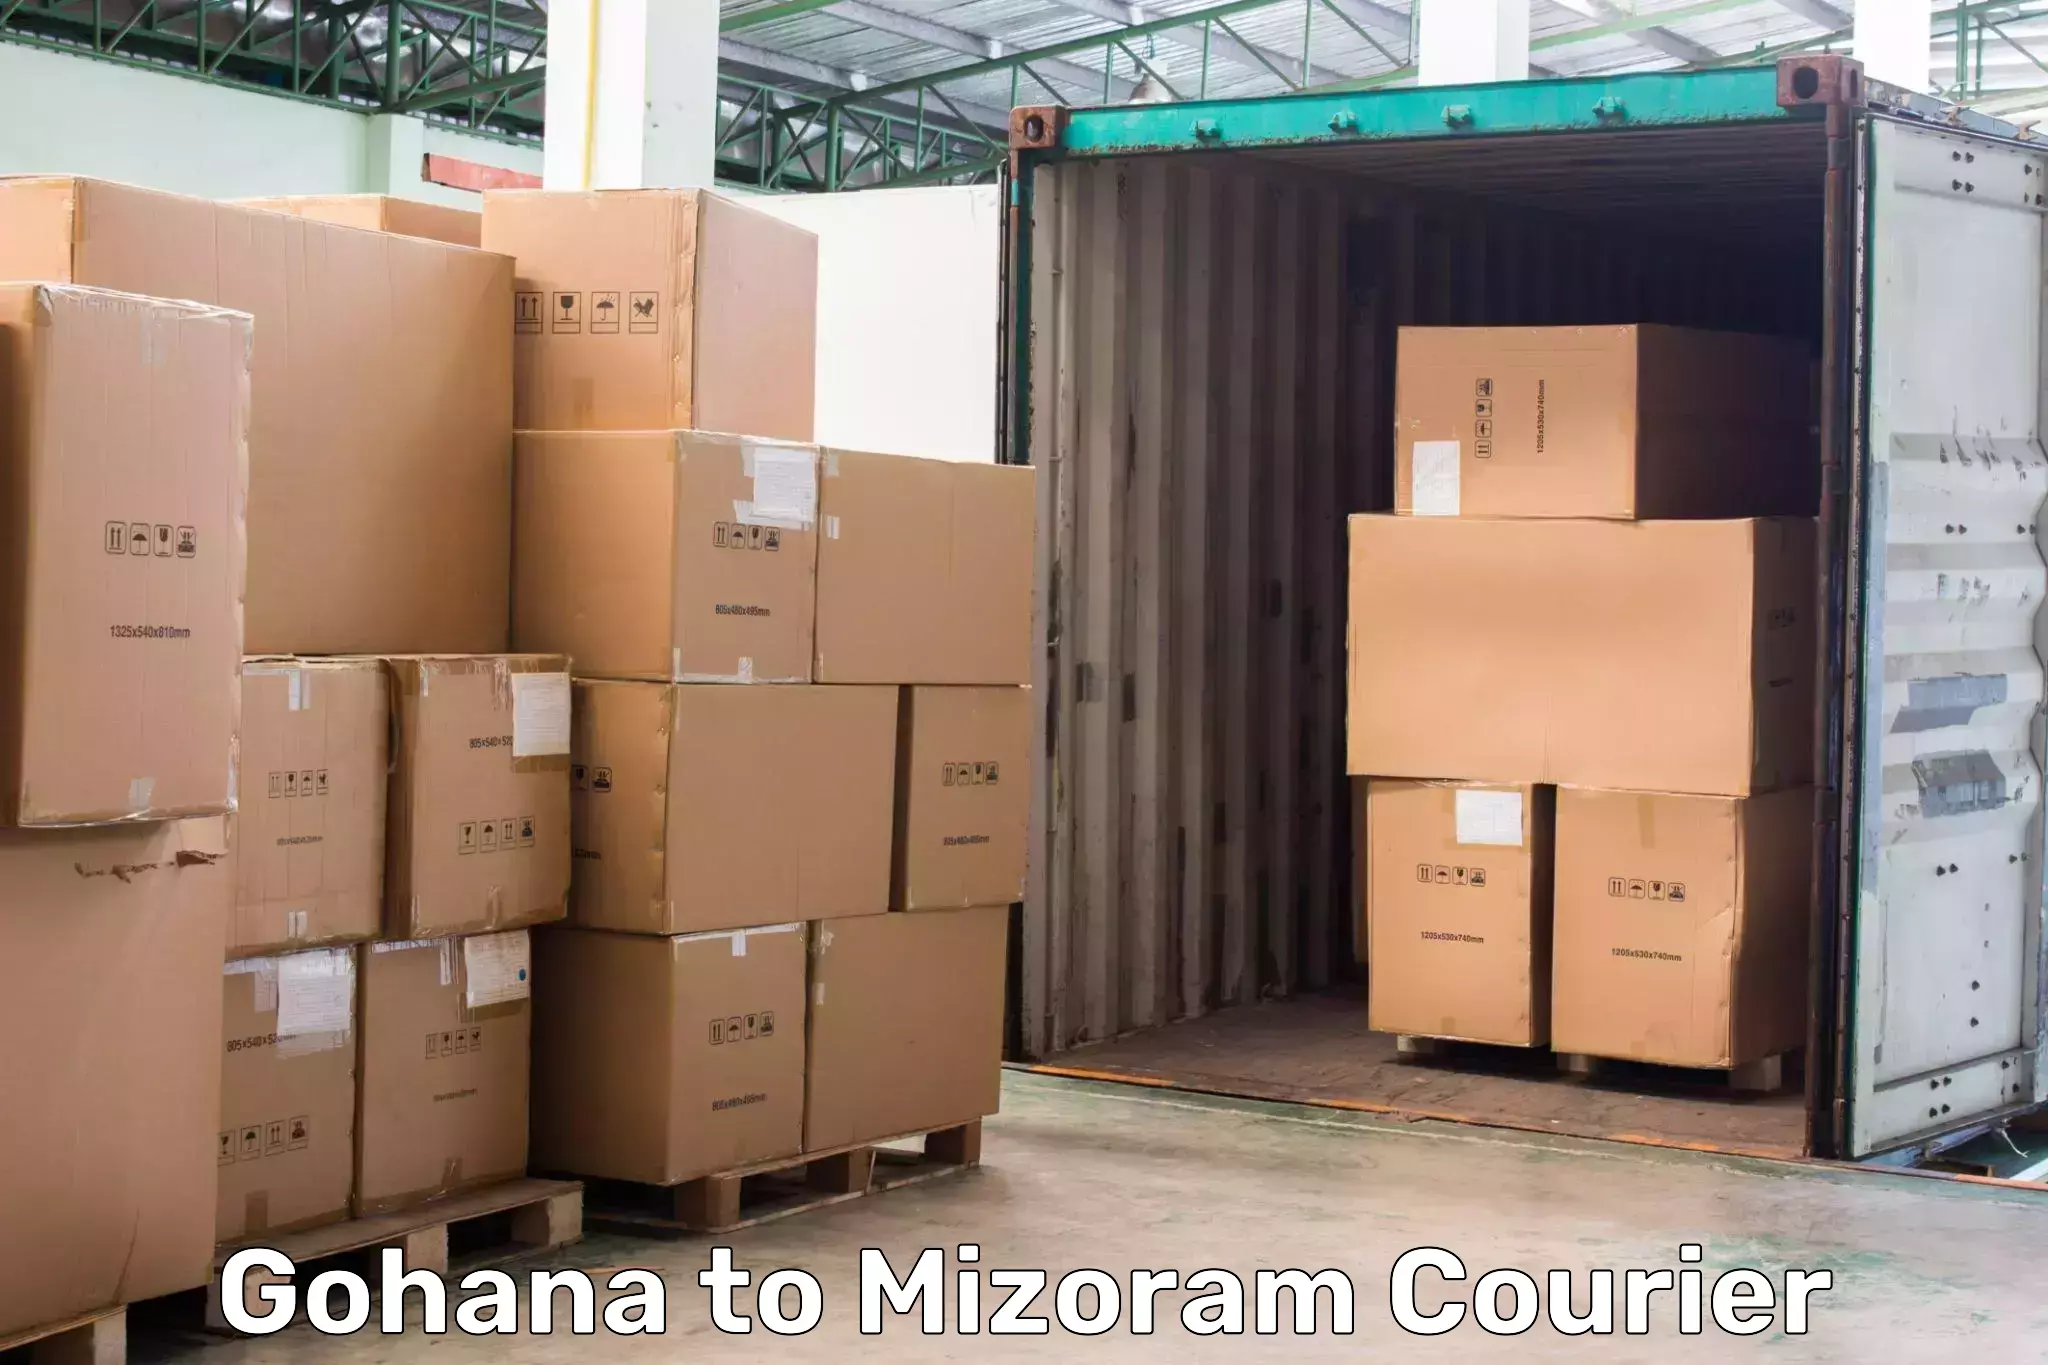 Courier service efficiency in Gohana to Mizoram